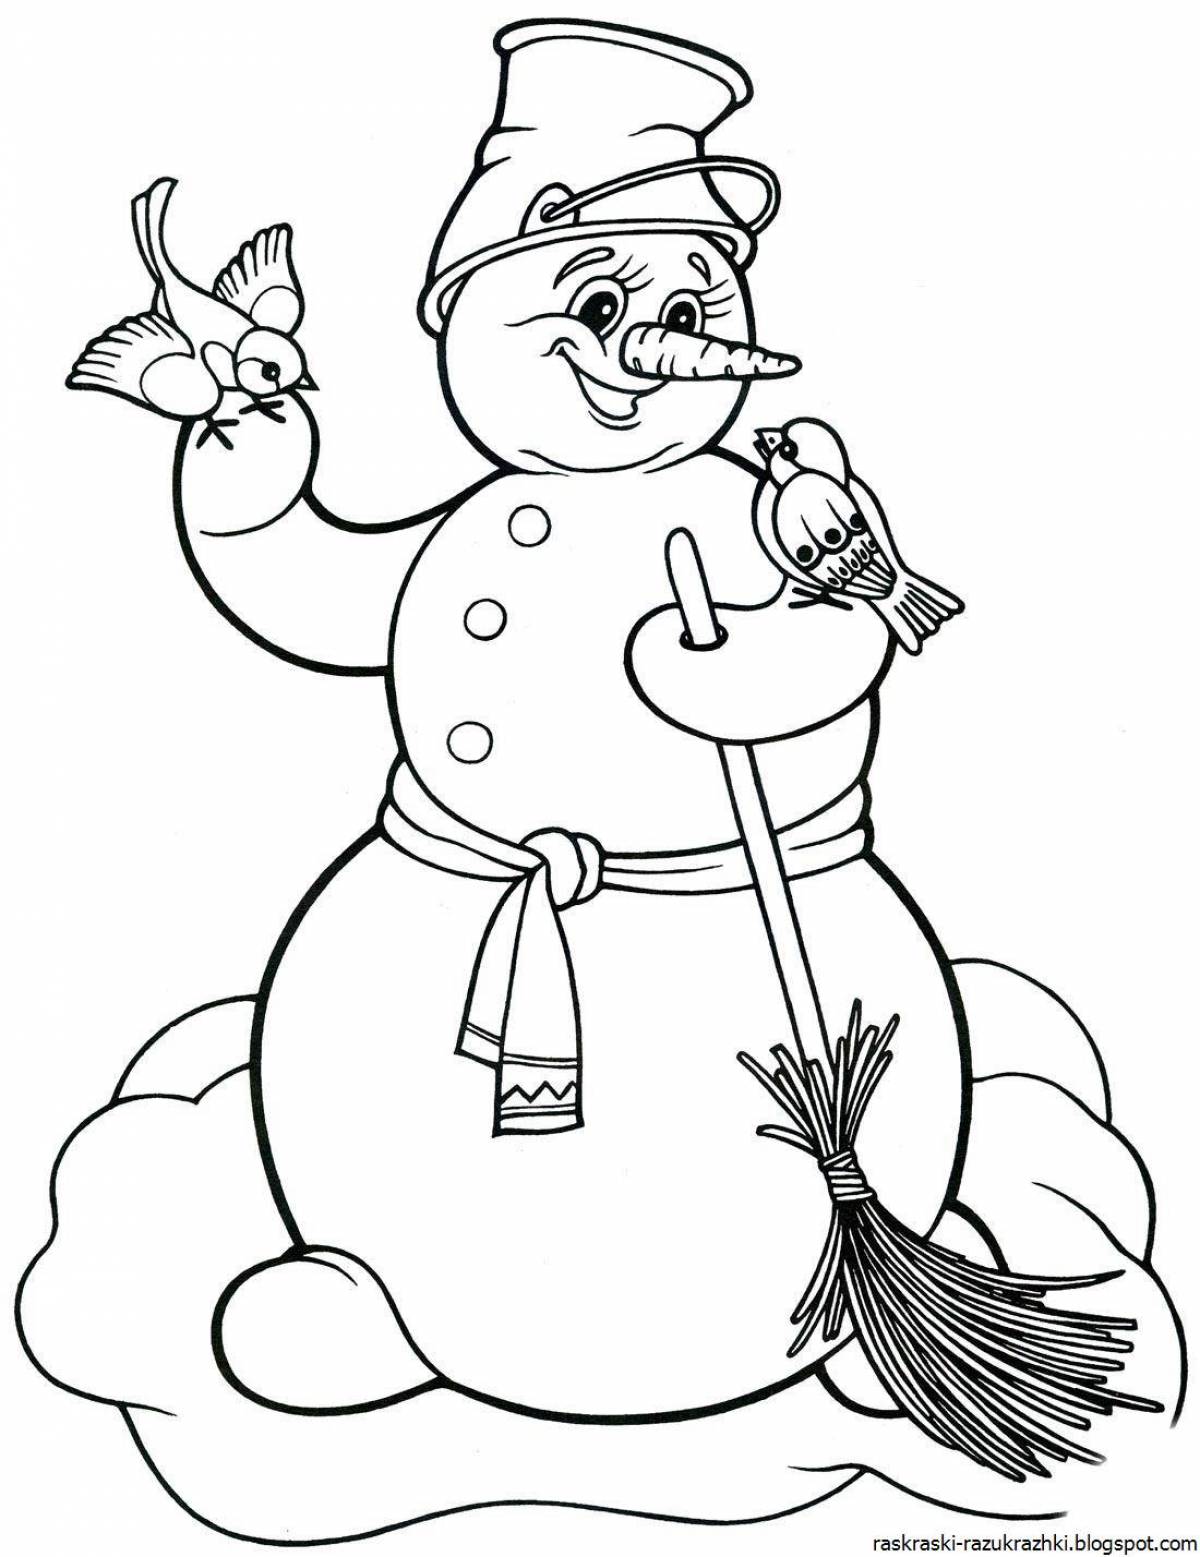 Fabulous snowman coloring for kids